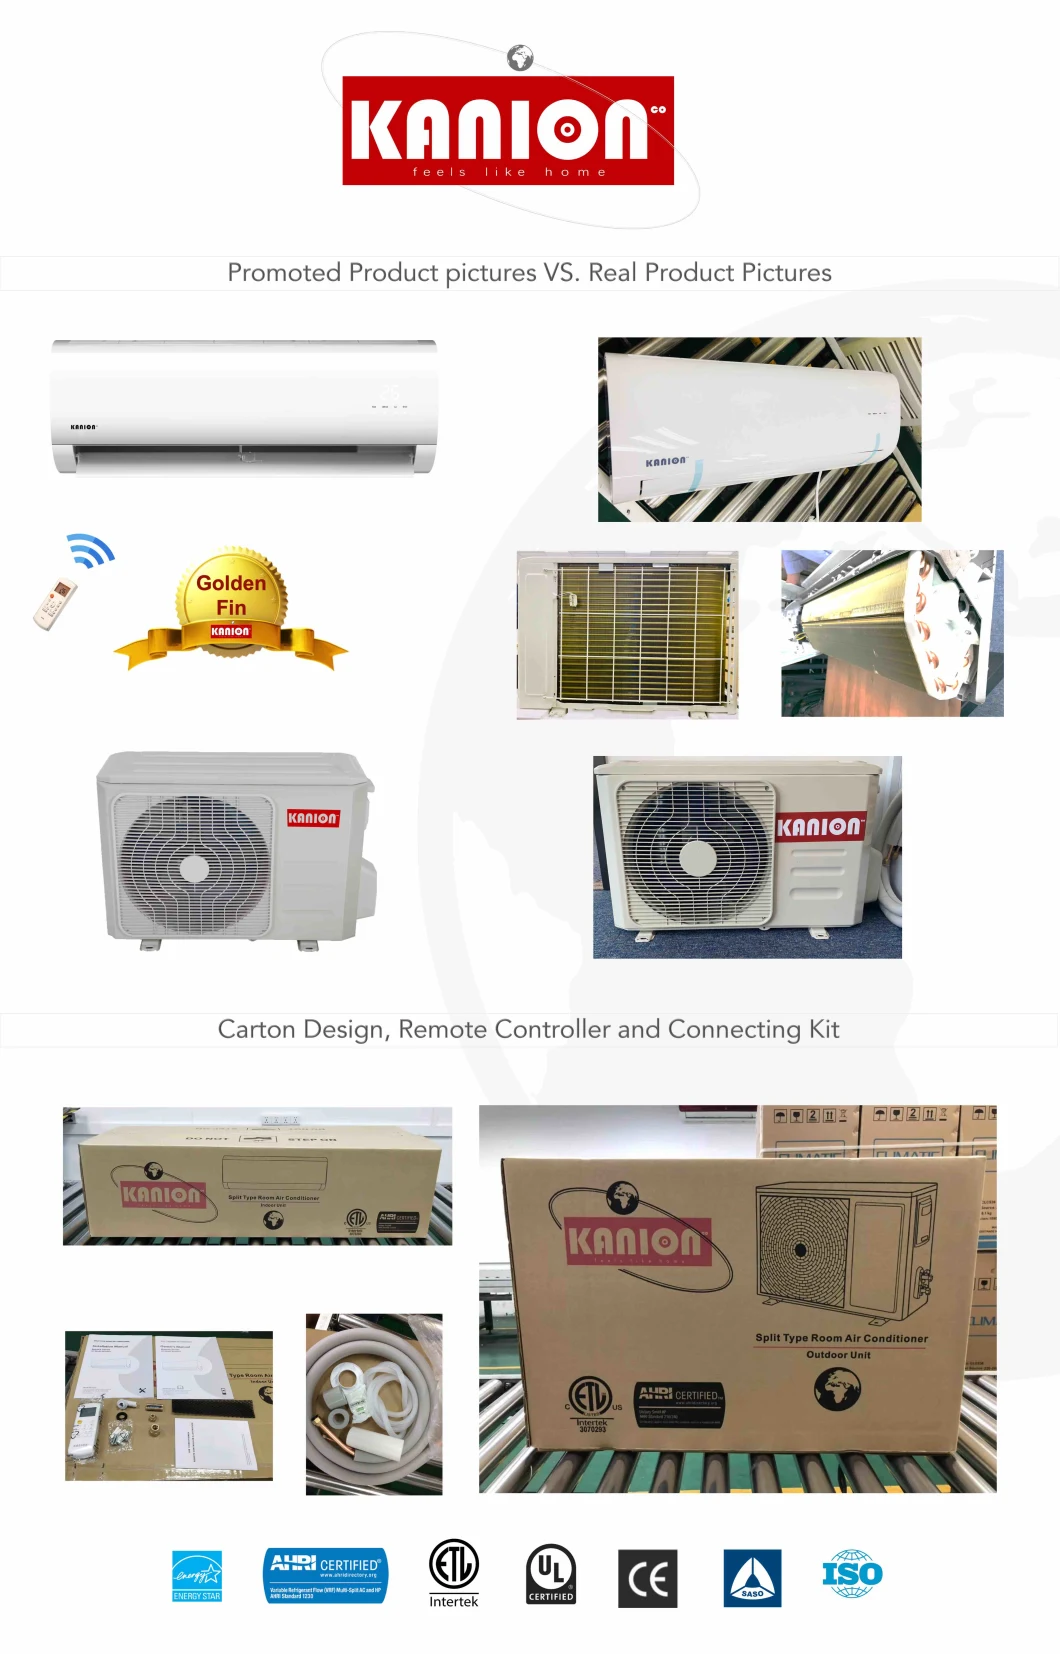 18000BTU Hybrid Solar Panel Heat Pump Air Conditioner AC